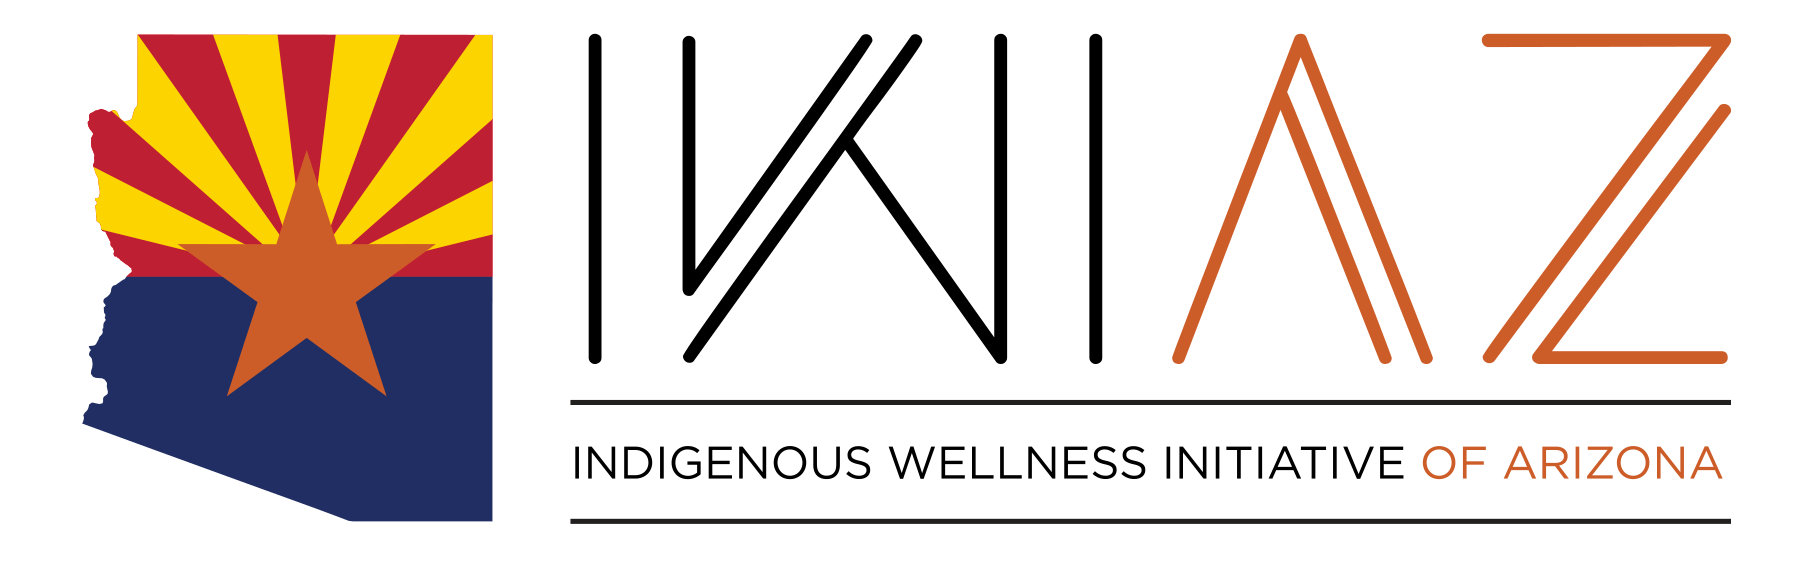 Indigenous Wellness Initiative of Arizona logo